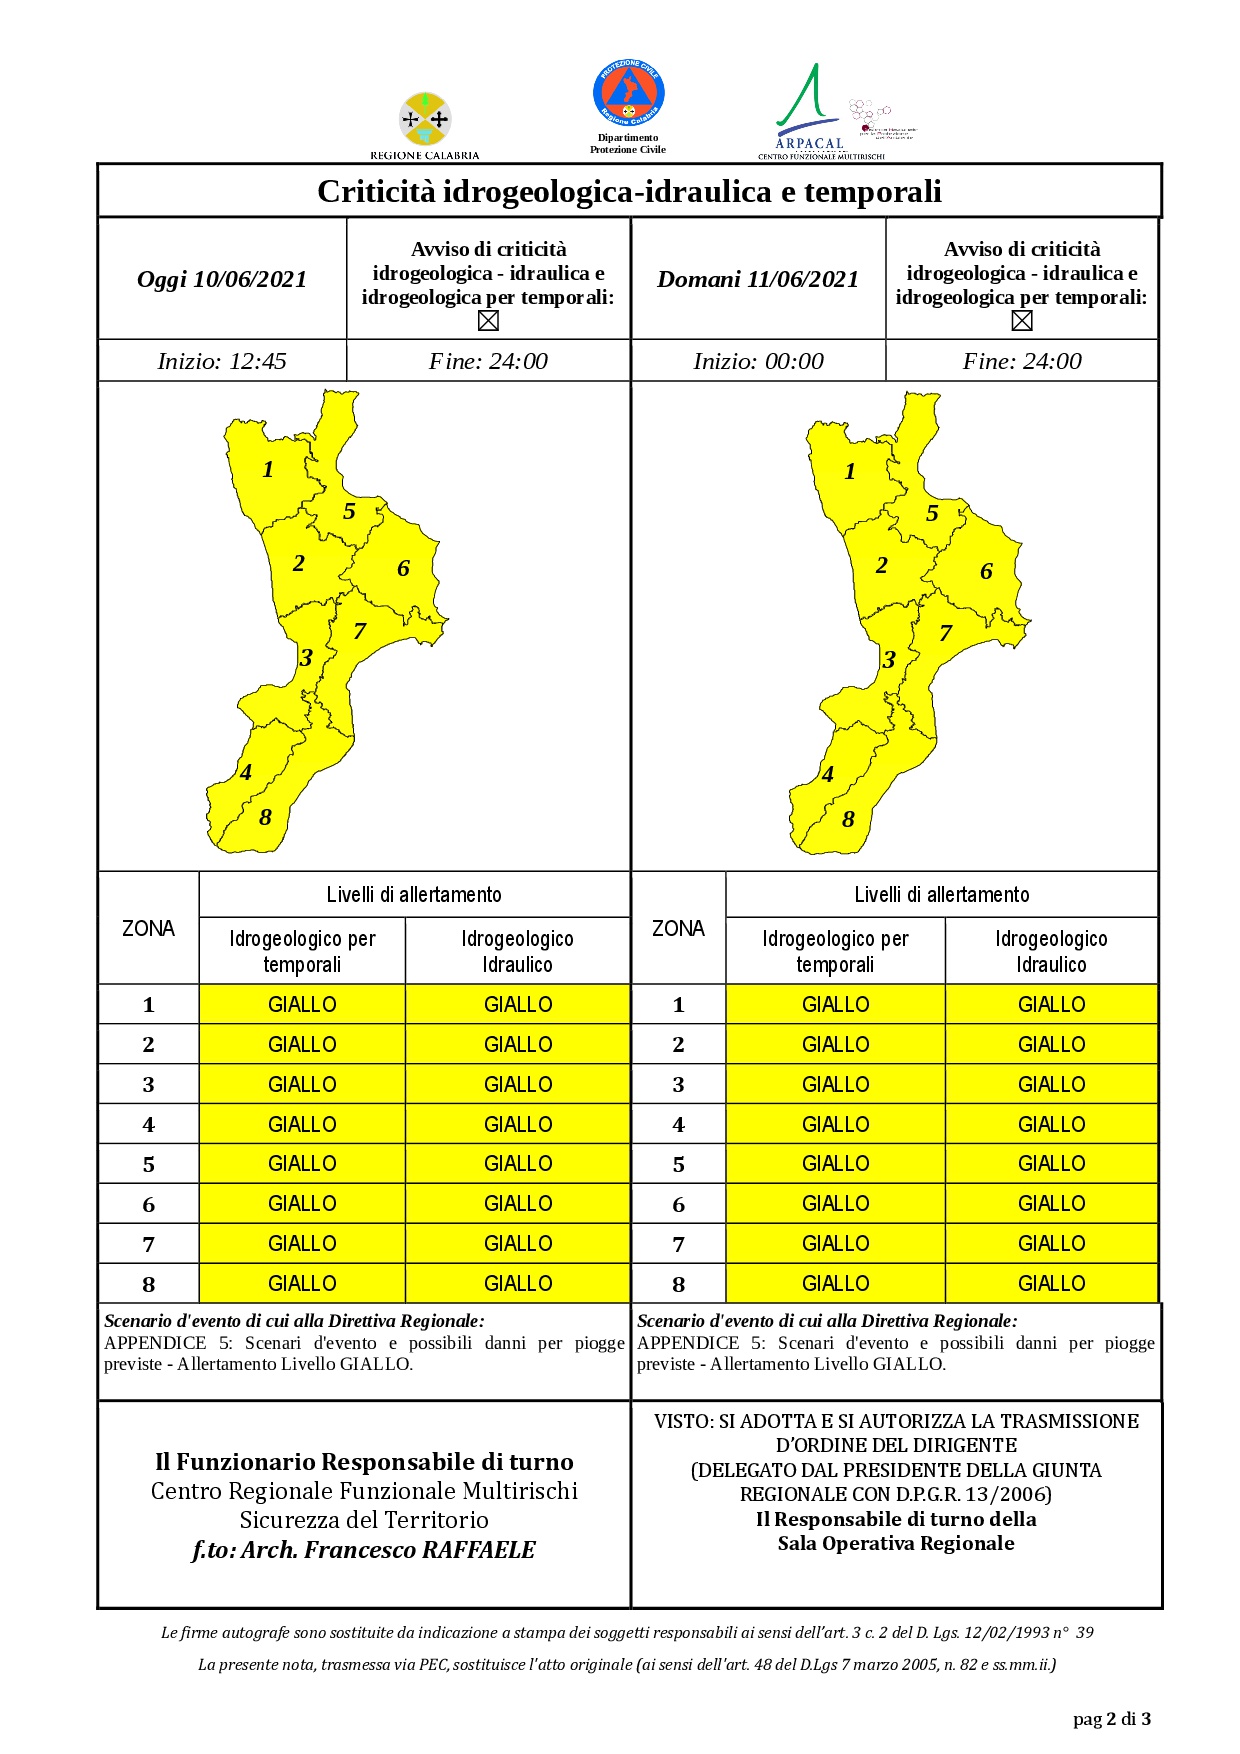 Criticità idrogeologica-idraulica e temporali in Calabria 10-06-2021